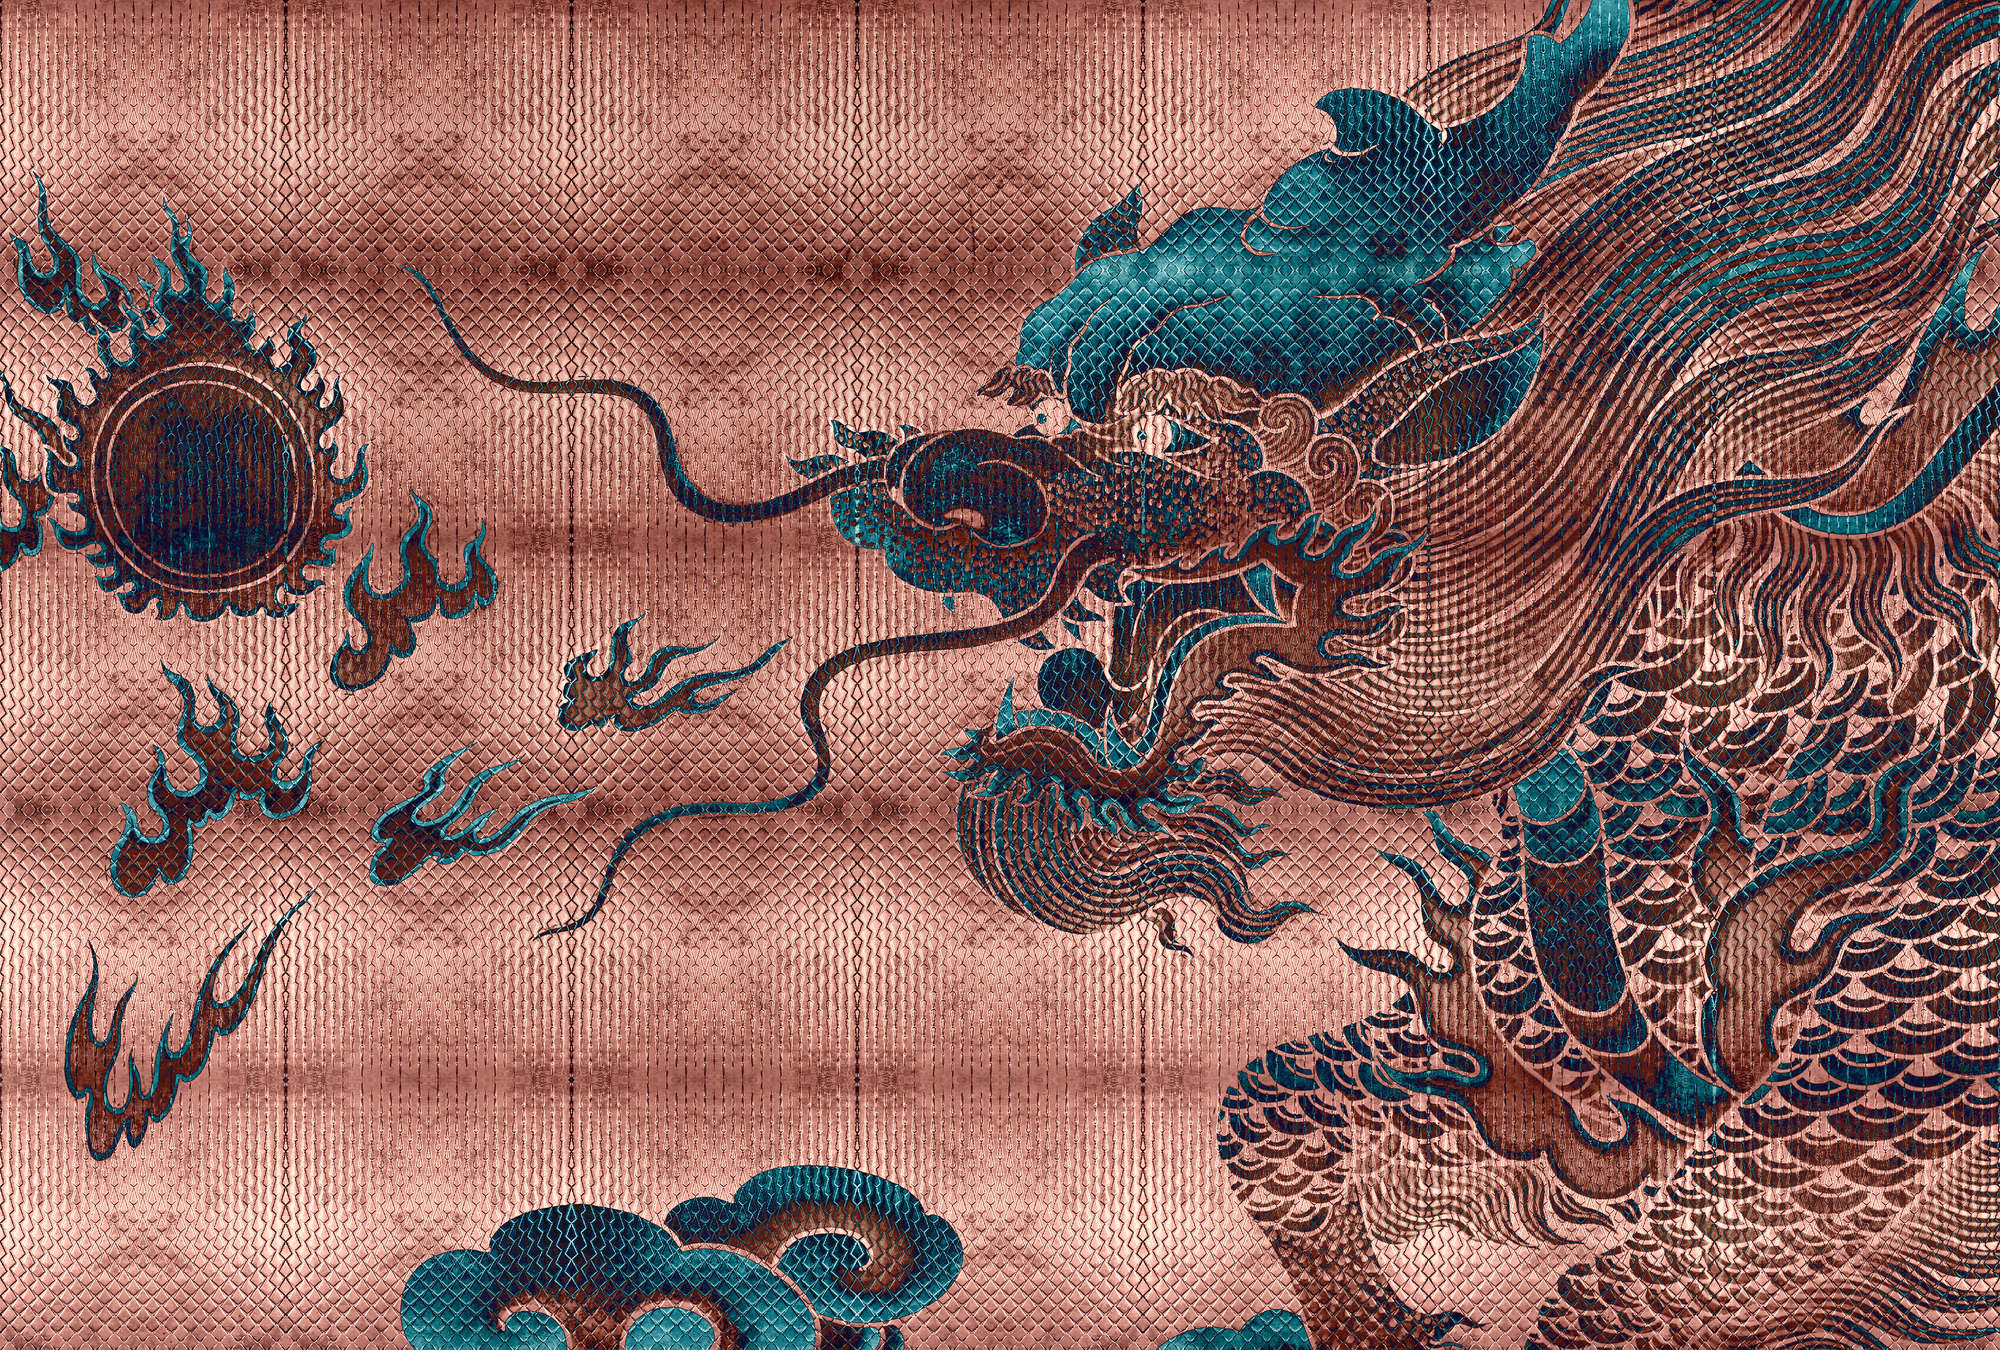             Shenzen 1 - Mural de pared Dragón de estilo asiático con colores metálicos
        